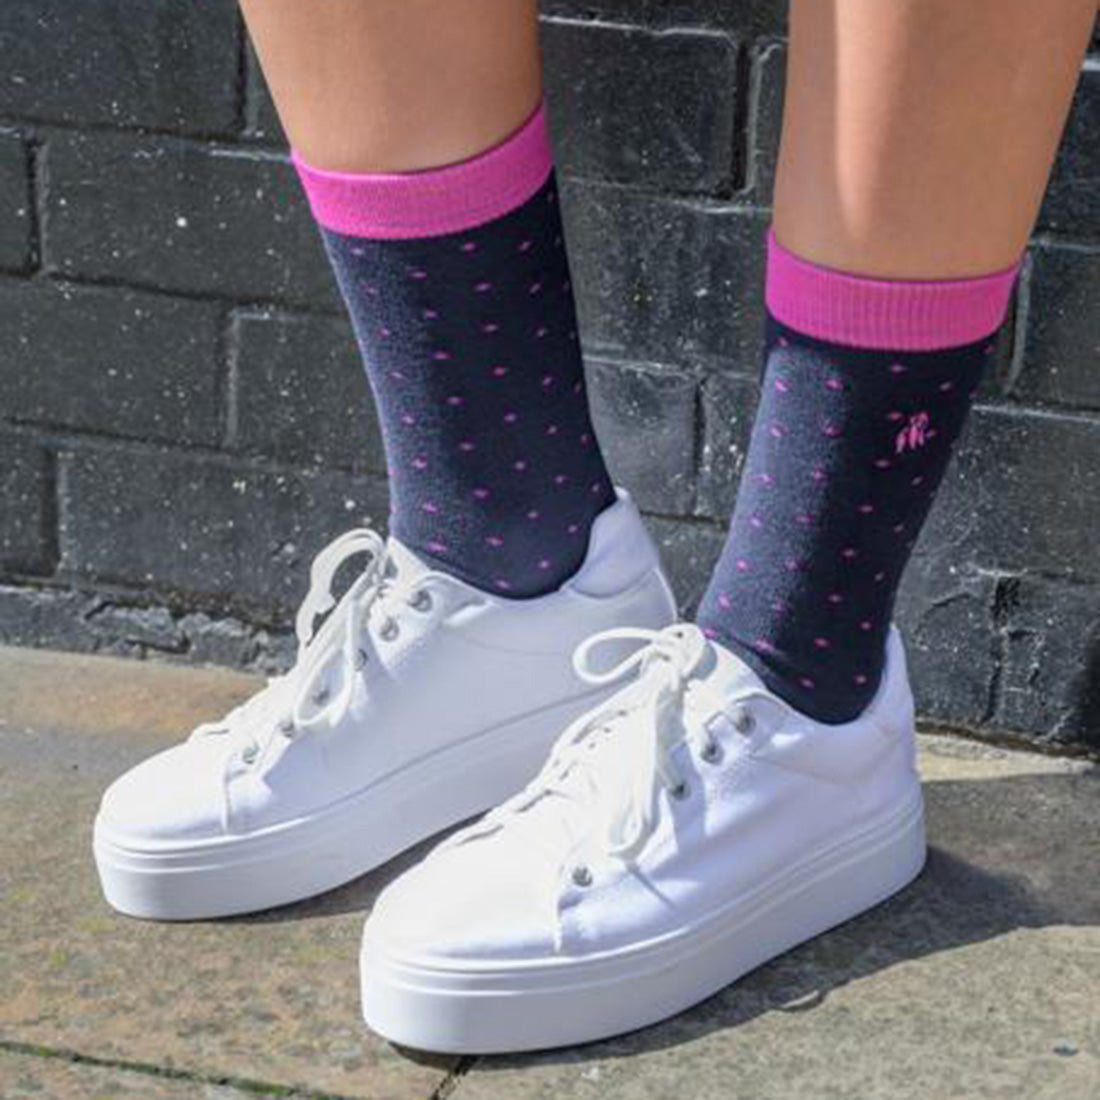 socks-spotted-pink-bamboo-socks-2_b882b03f-f700-4ade-9e35-028d4e390fcd.jpg